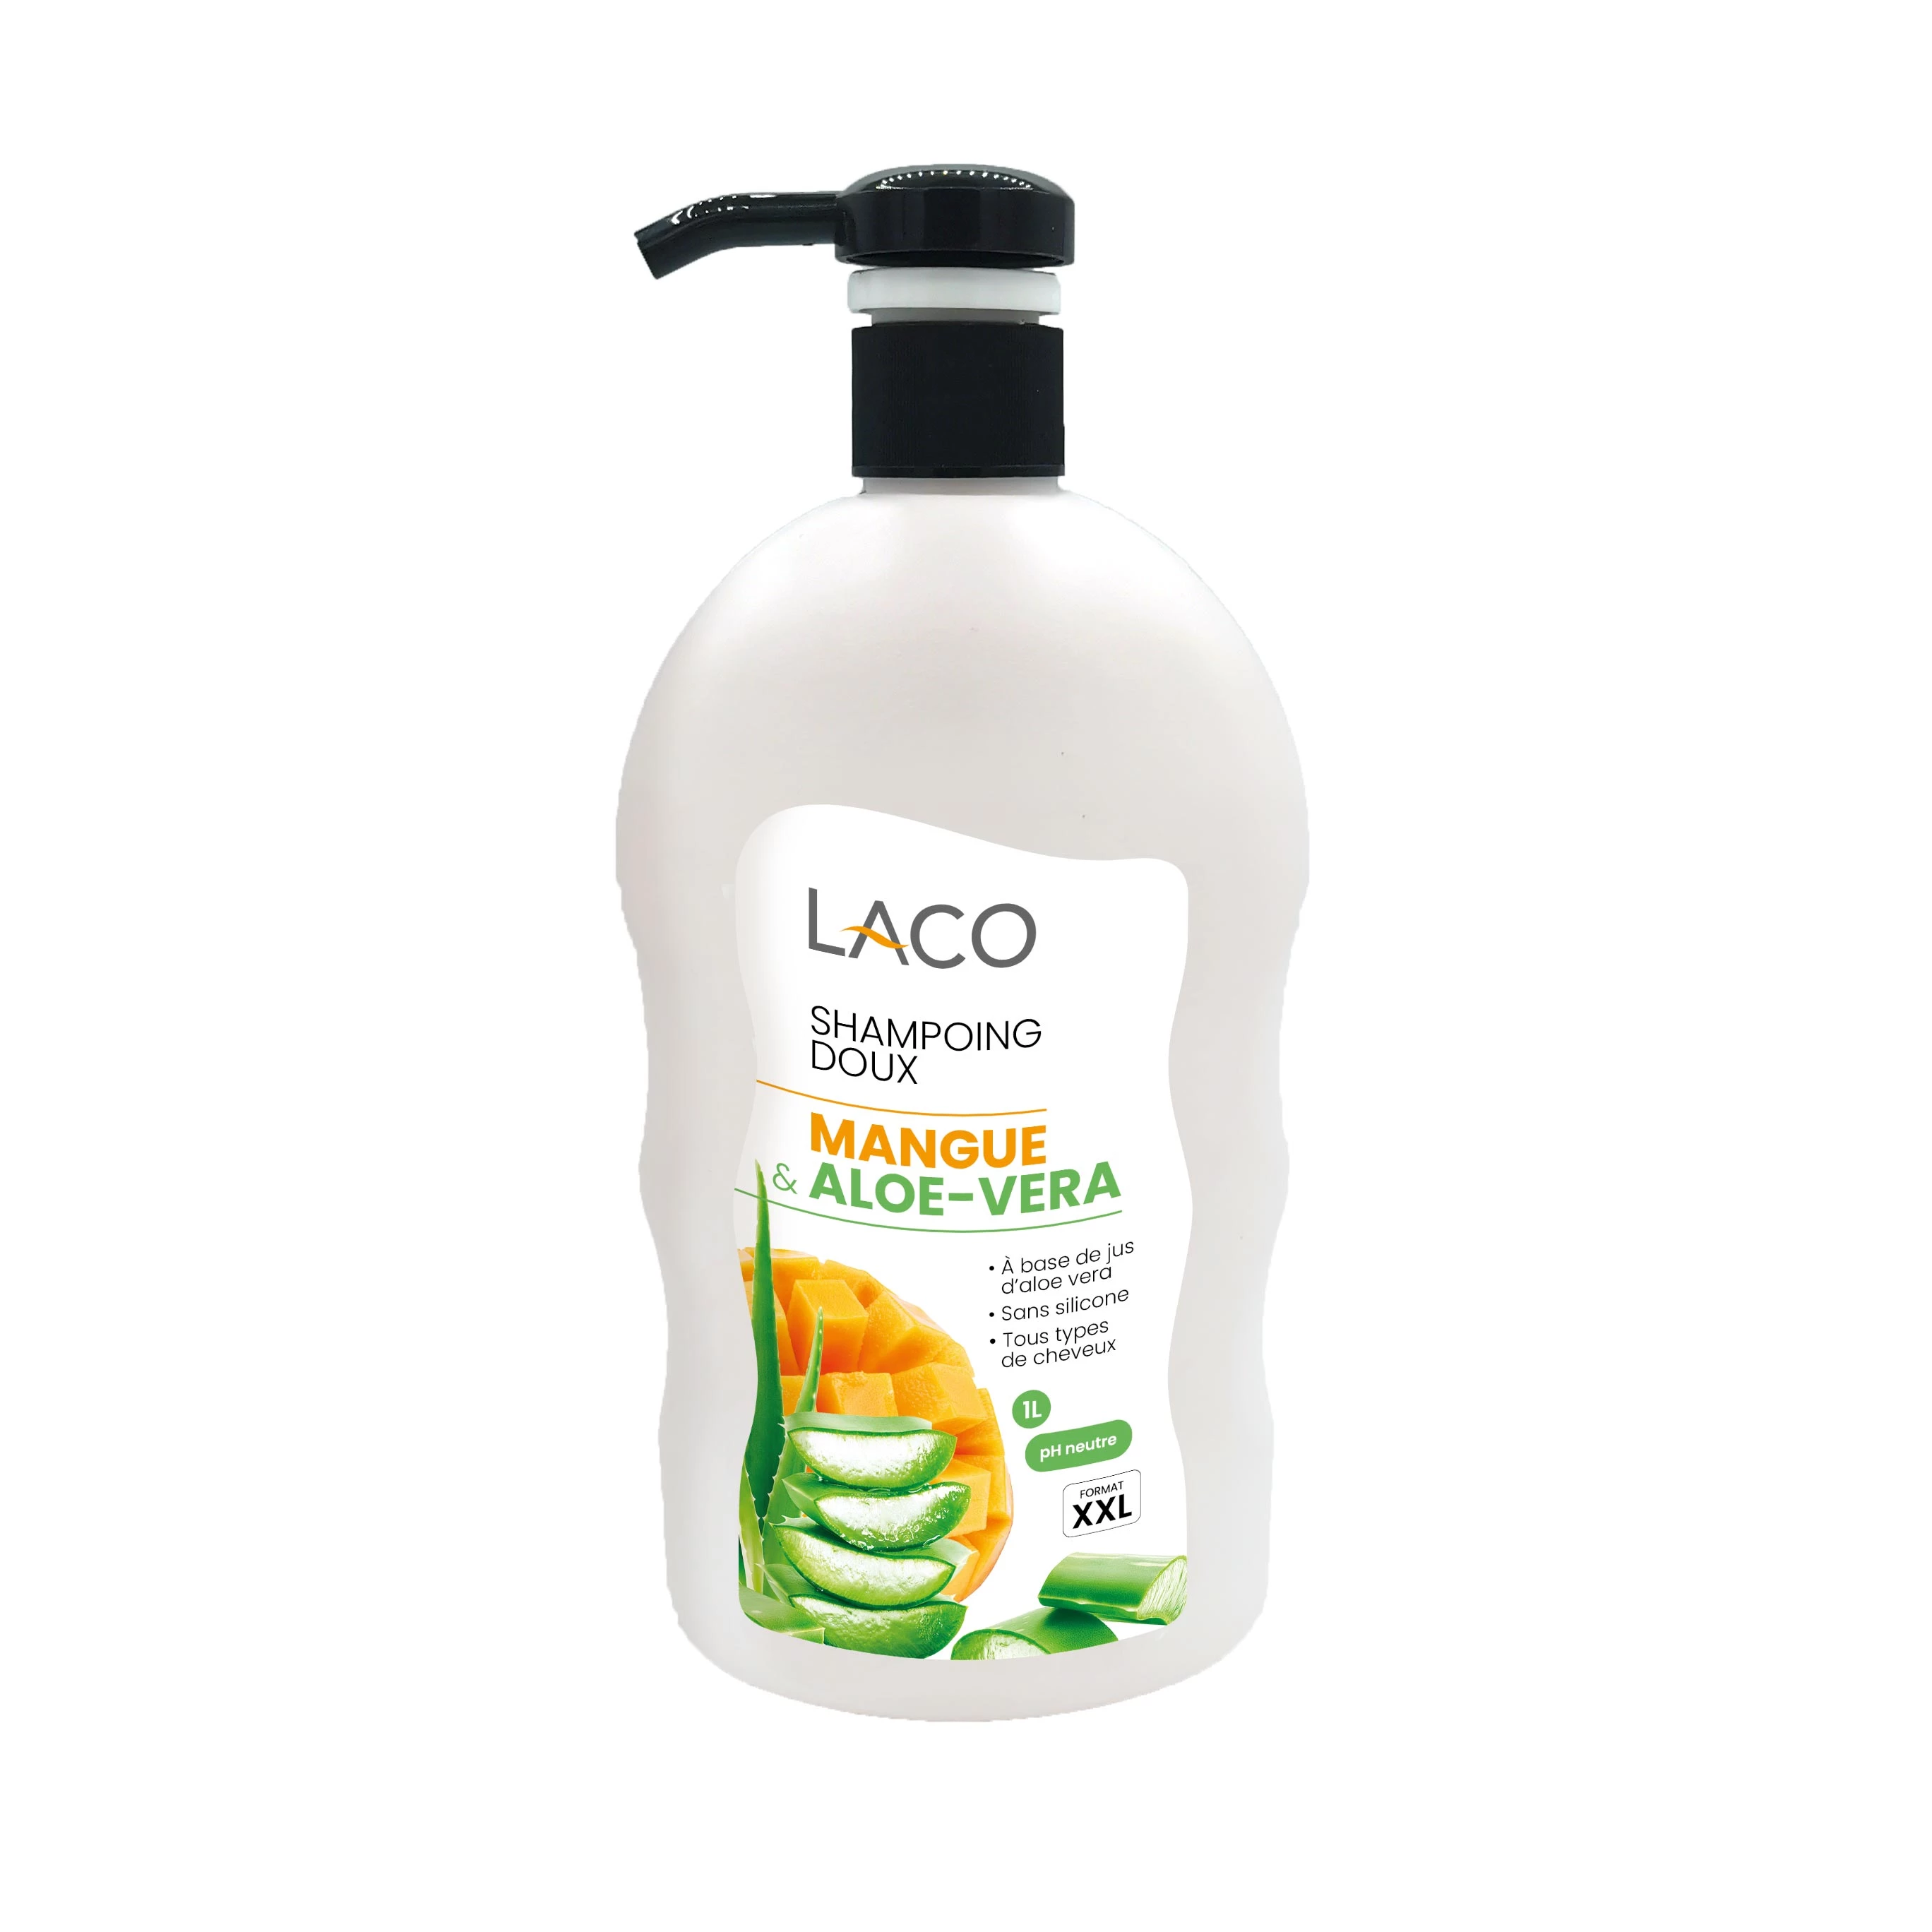 Shampoo all'aloe vera al mango, 1 litro - LACO